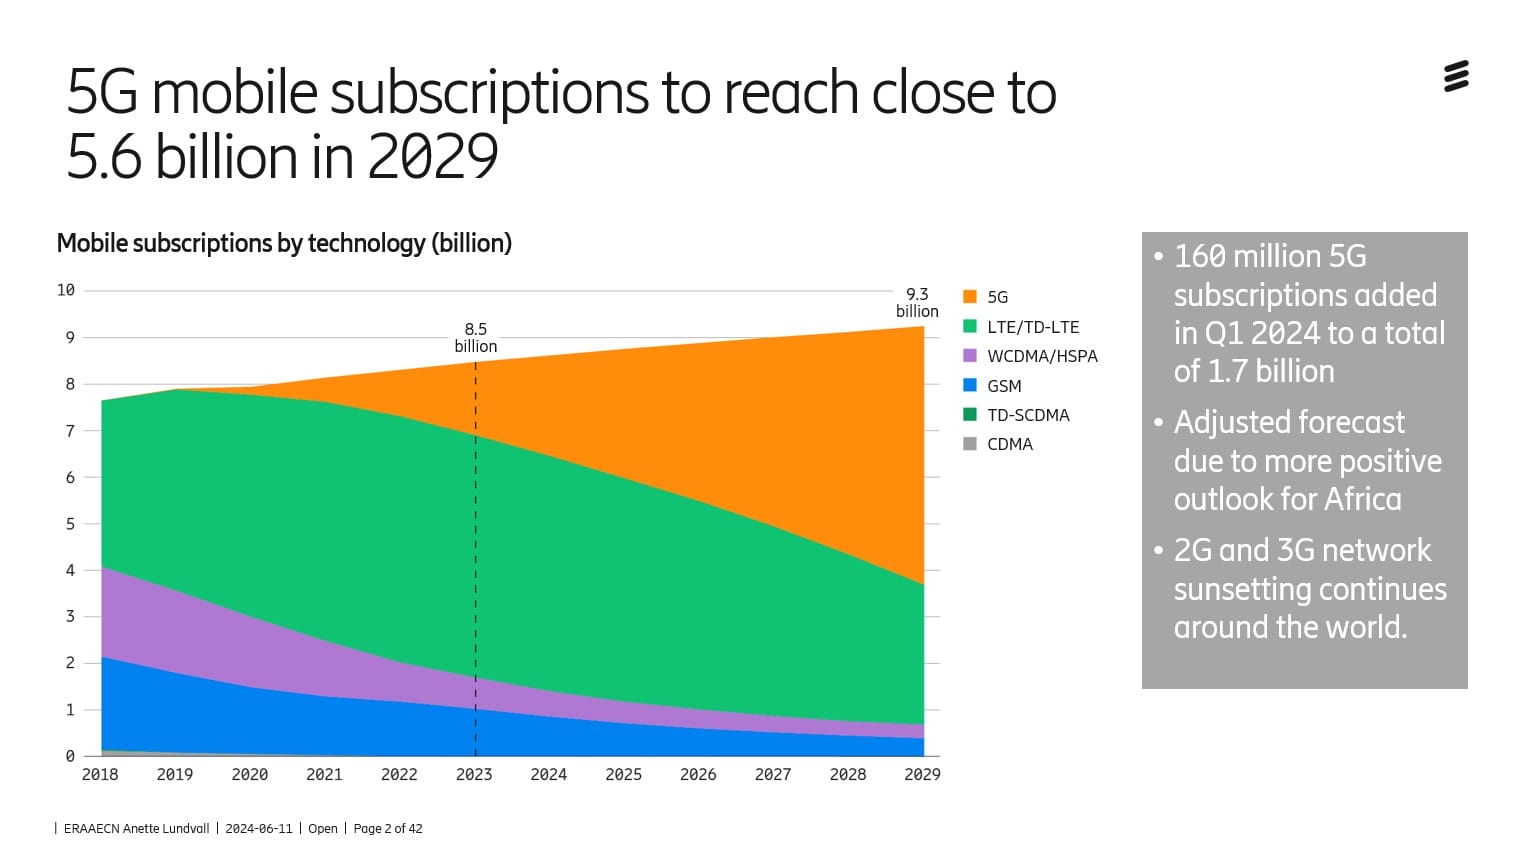 Ericsson Mobility เผยอีก 5 ปี ผู้ใช้บริการ 5G จะสูงแตะ 5.6 พันล้านราย 3